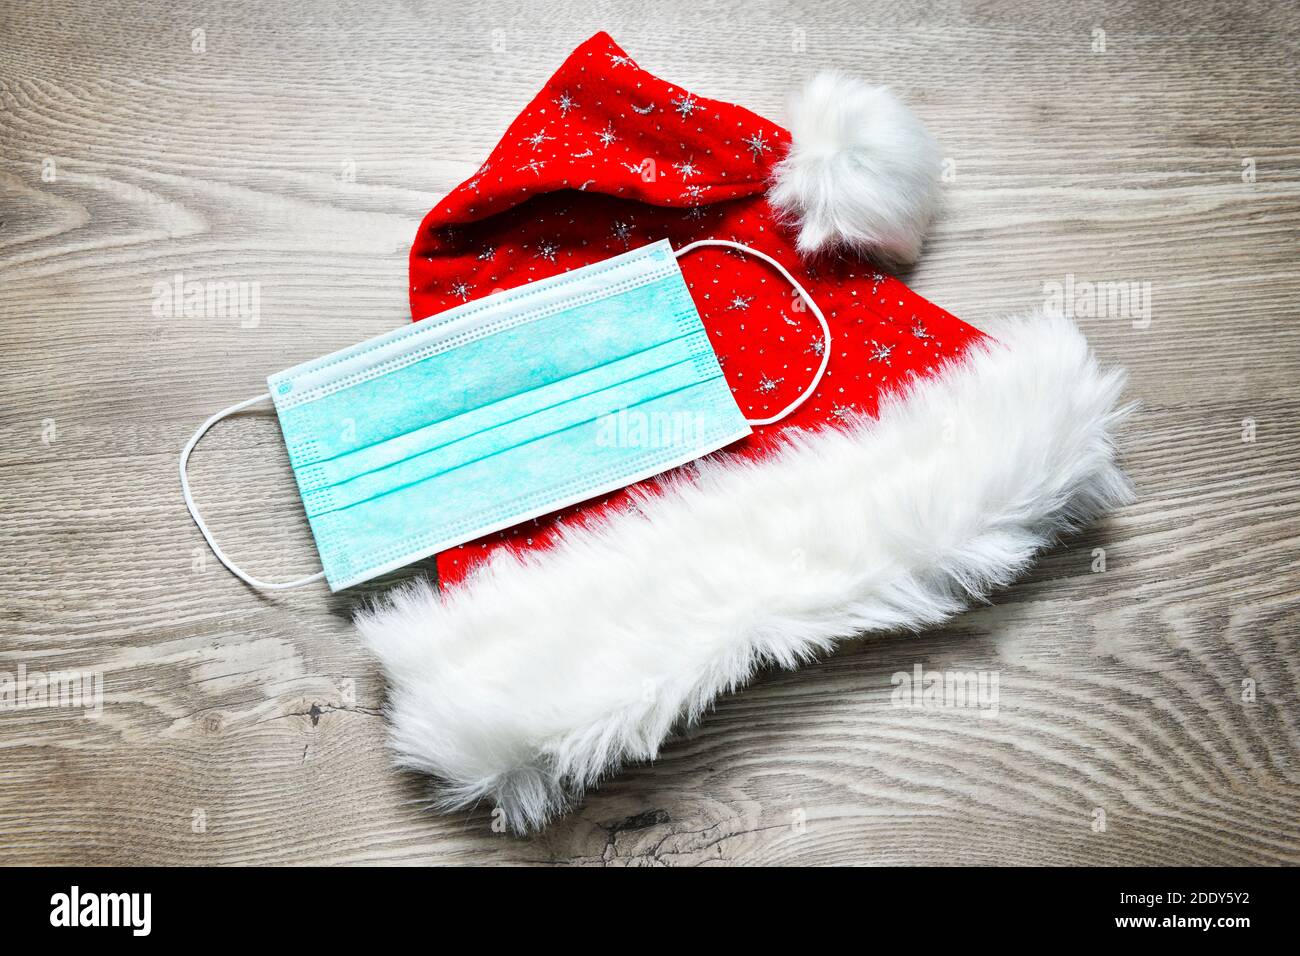 Face mask lying on Santa's hat, Corona Christmas Stock Photo